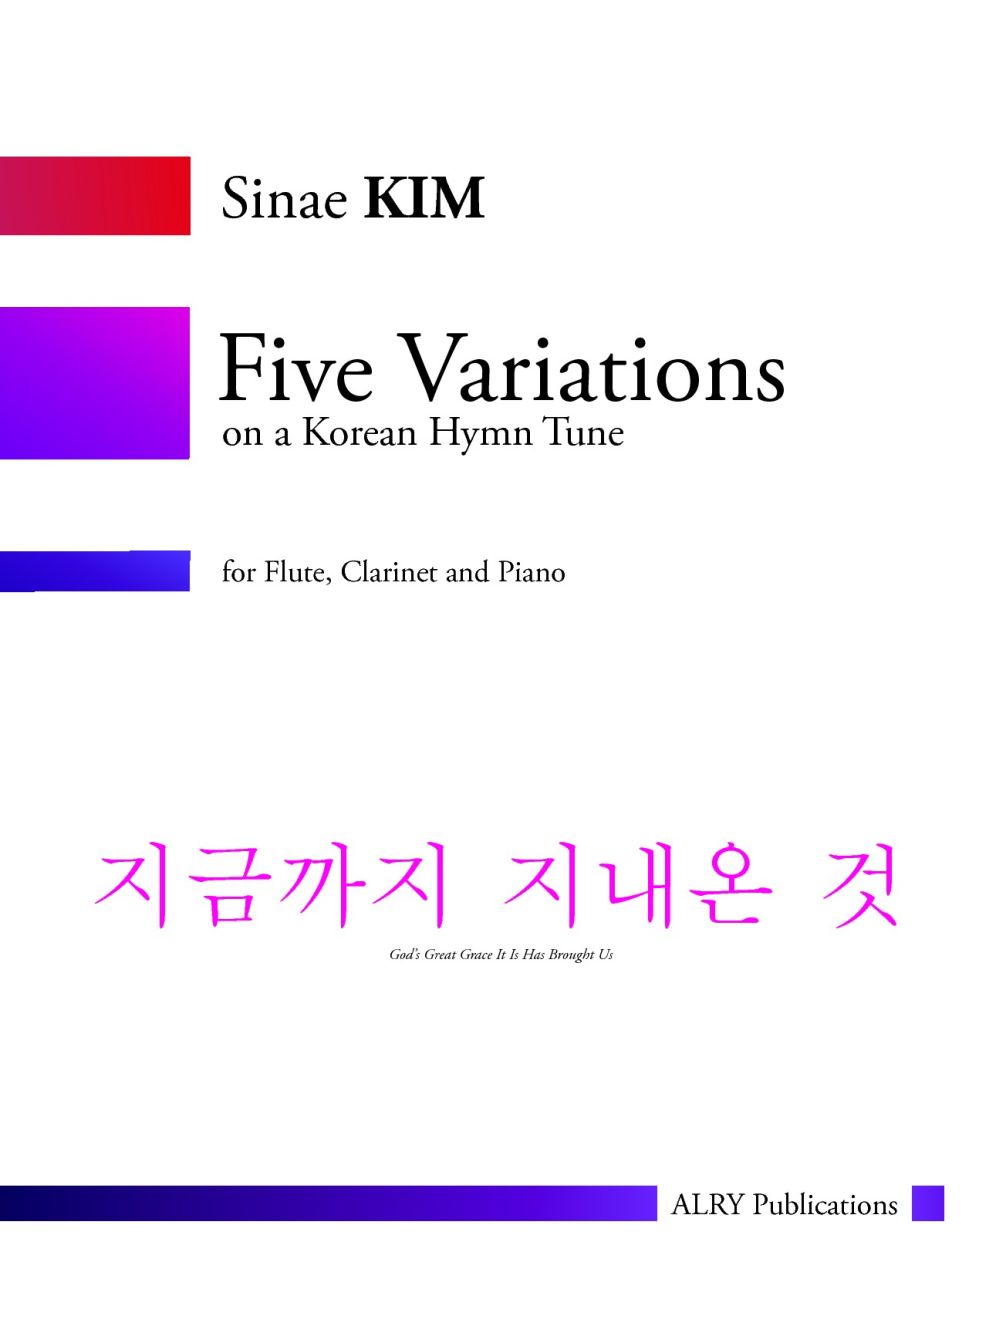 5 Variations On A Korean Hymn Tune (KIM SINAE)